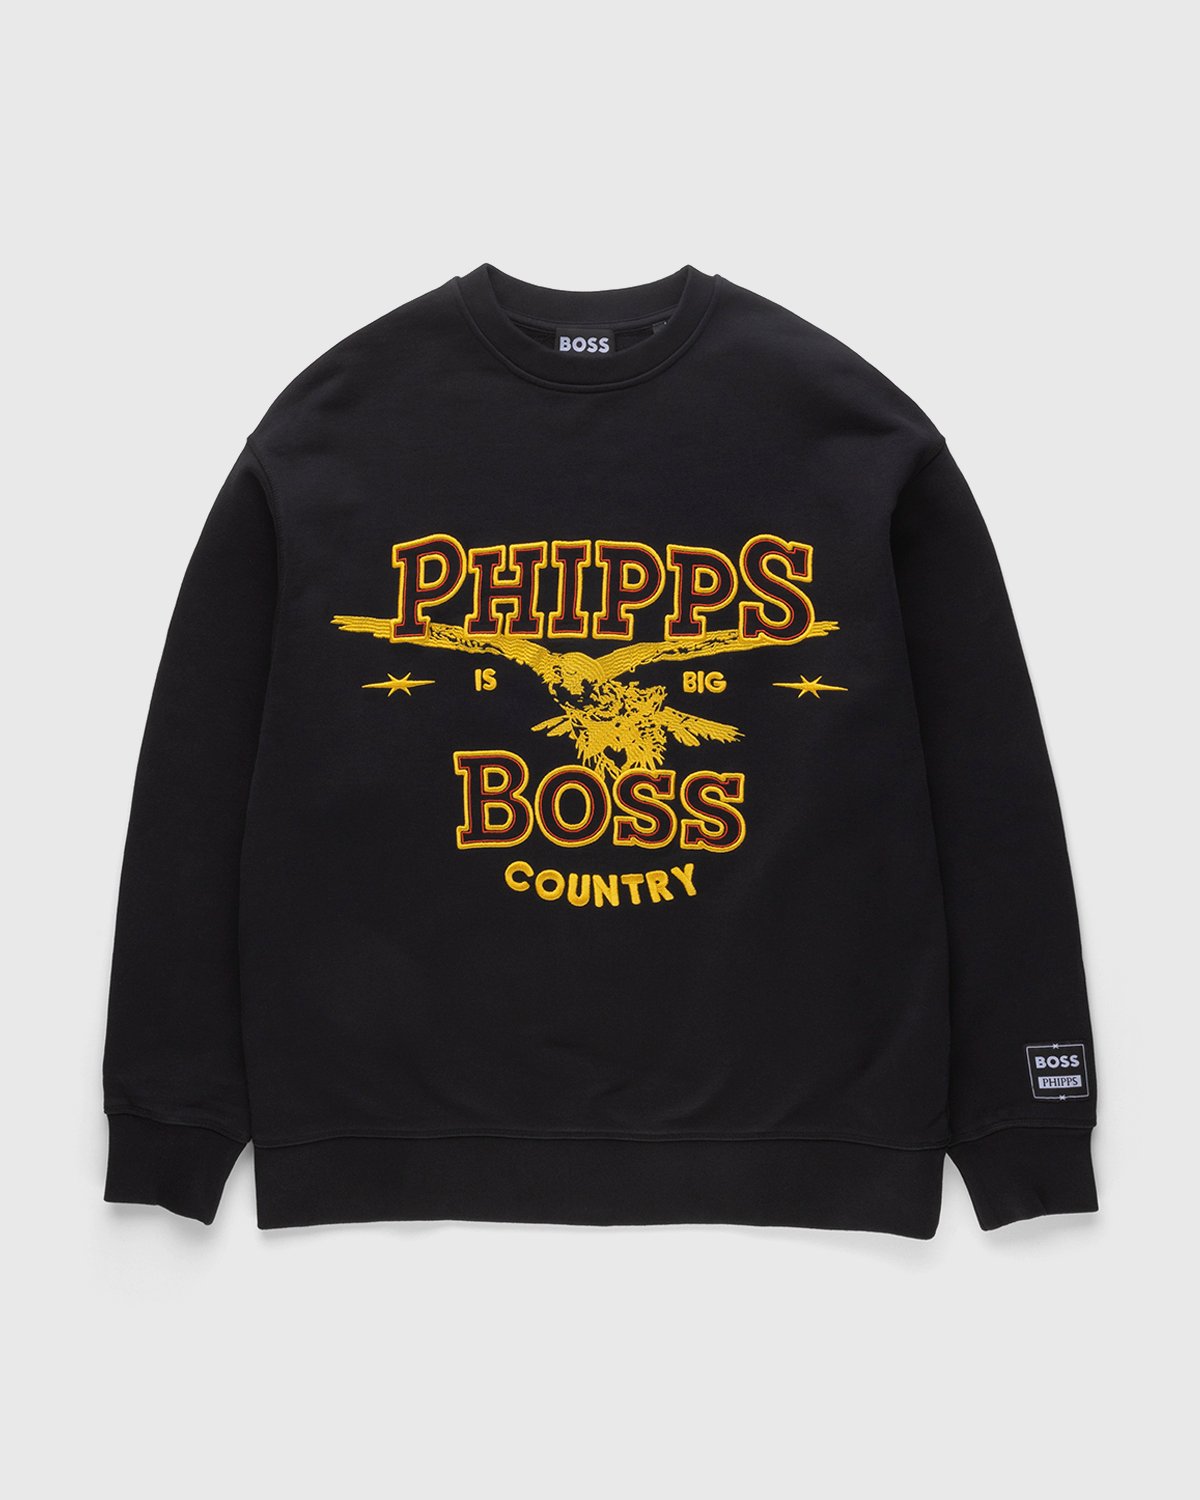 BOSS x Phipps - Co-Branded Organic Cotton Sweatshirt Black - Clothing - Black - Image 1